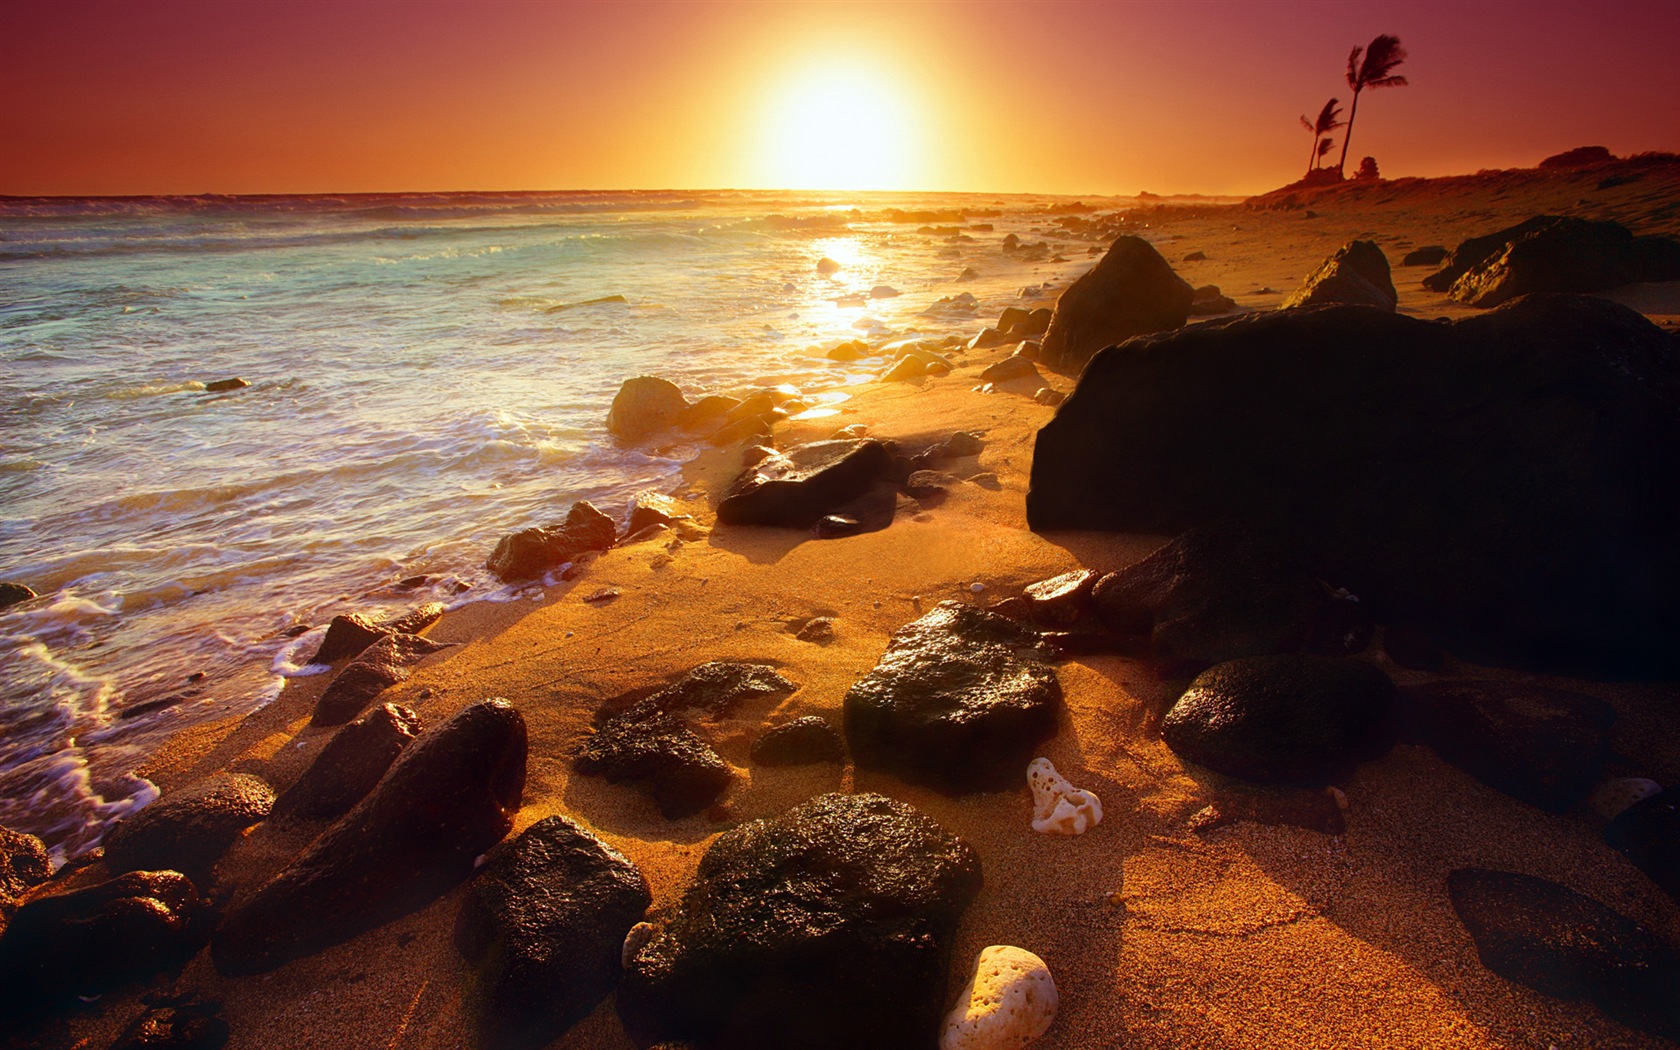 Windows 8 theme wallpaper: Beach sunrise and sunset views #1 - 1680x1050